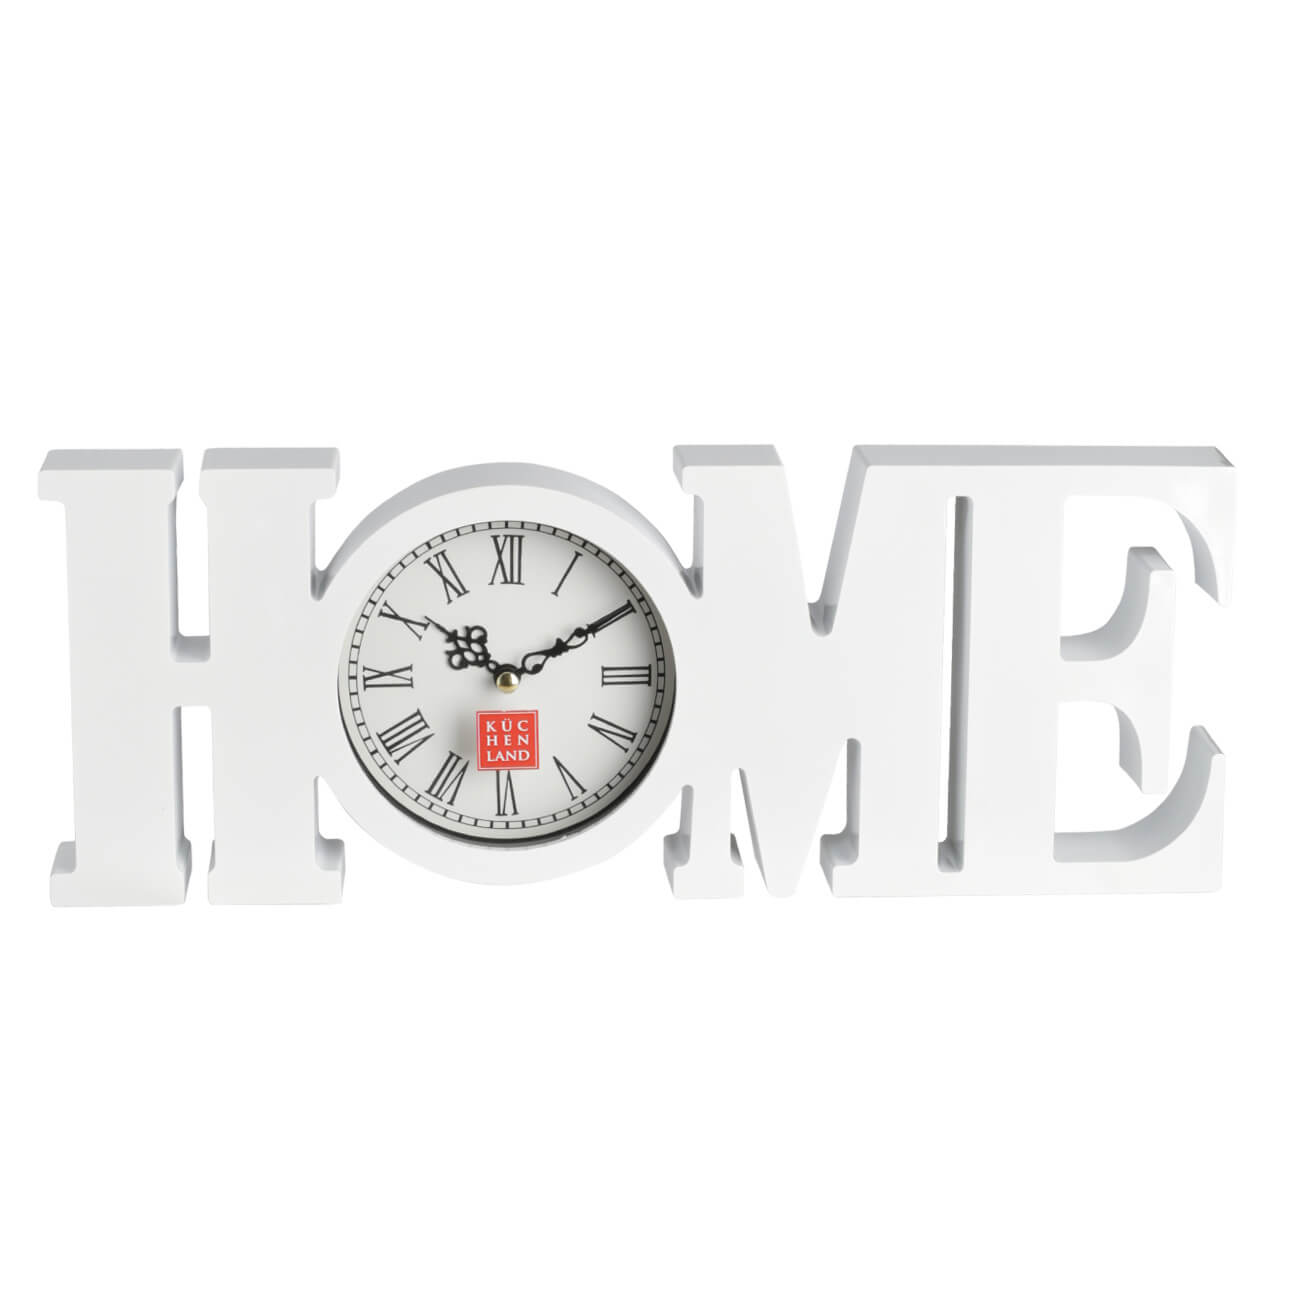 Часы настенные, 39х15 см, пластик/стекло, белые, Ноmе, Home deco белые часы bvitech